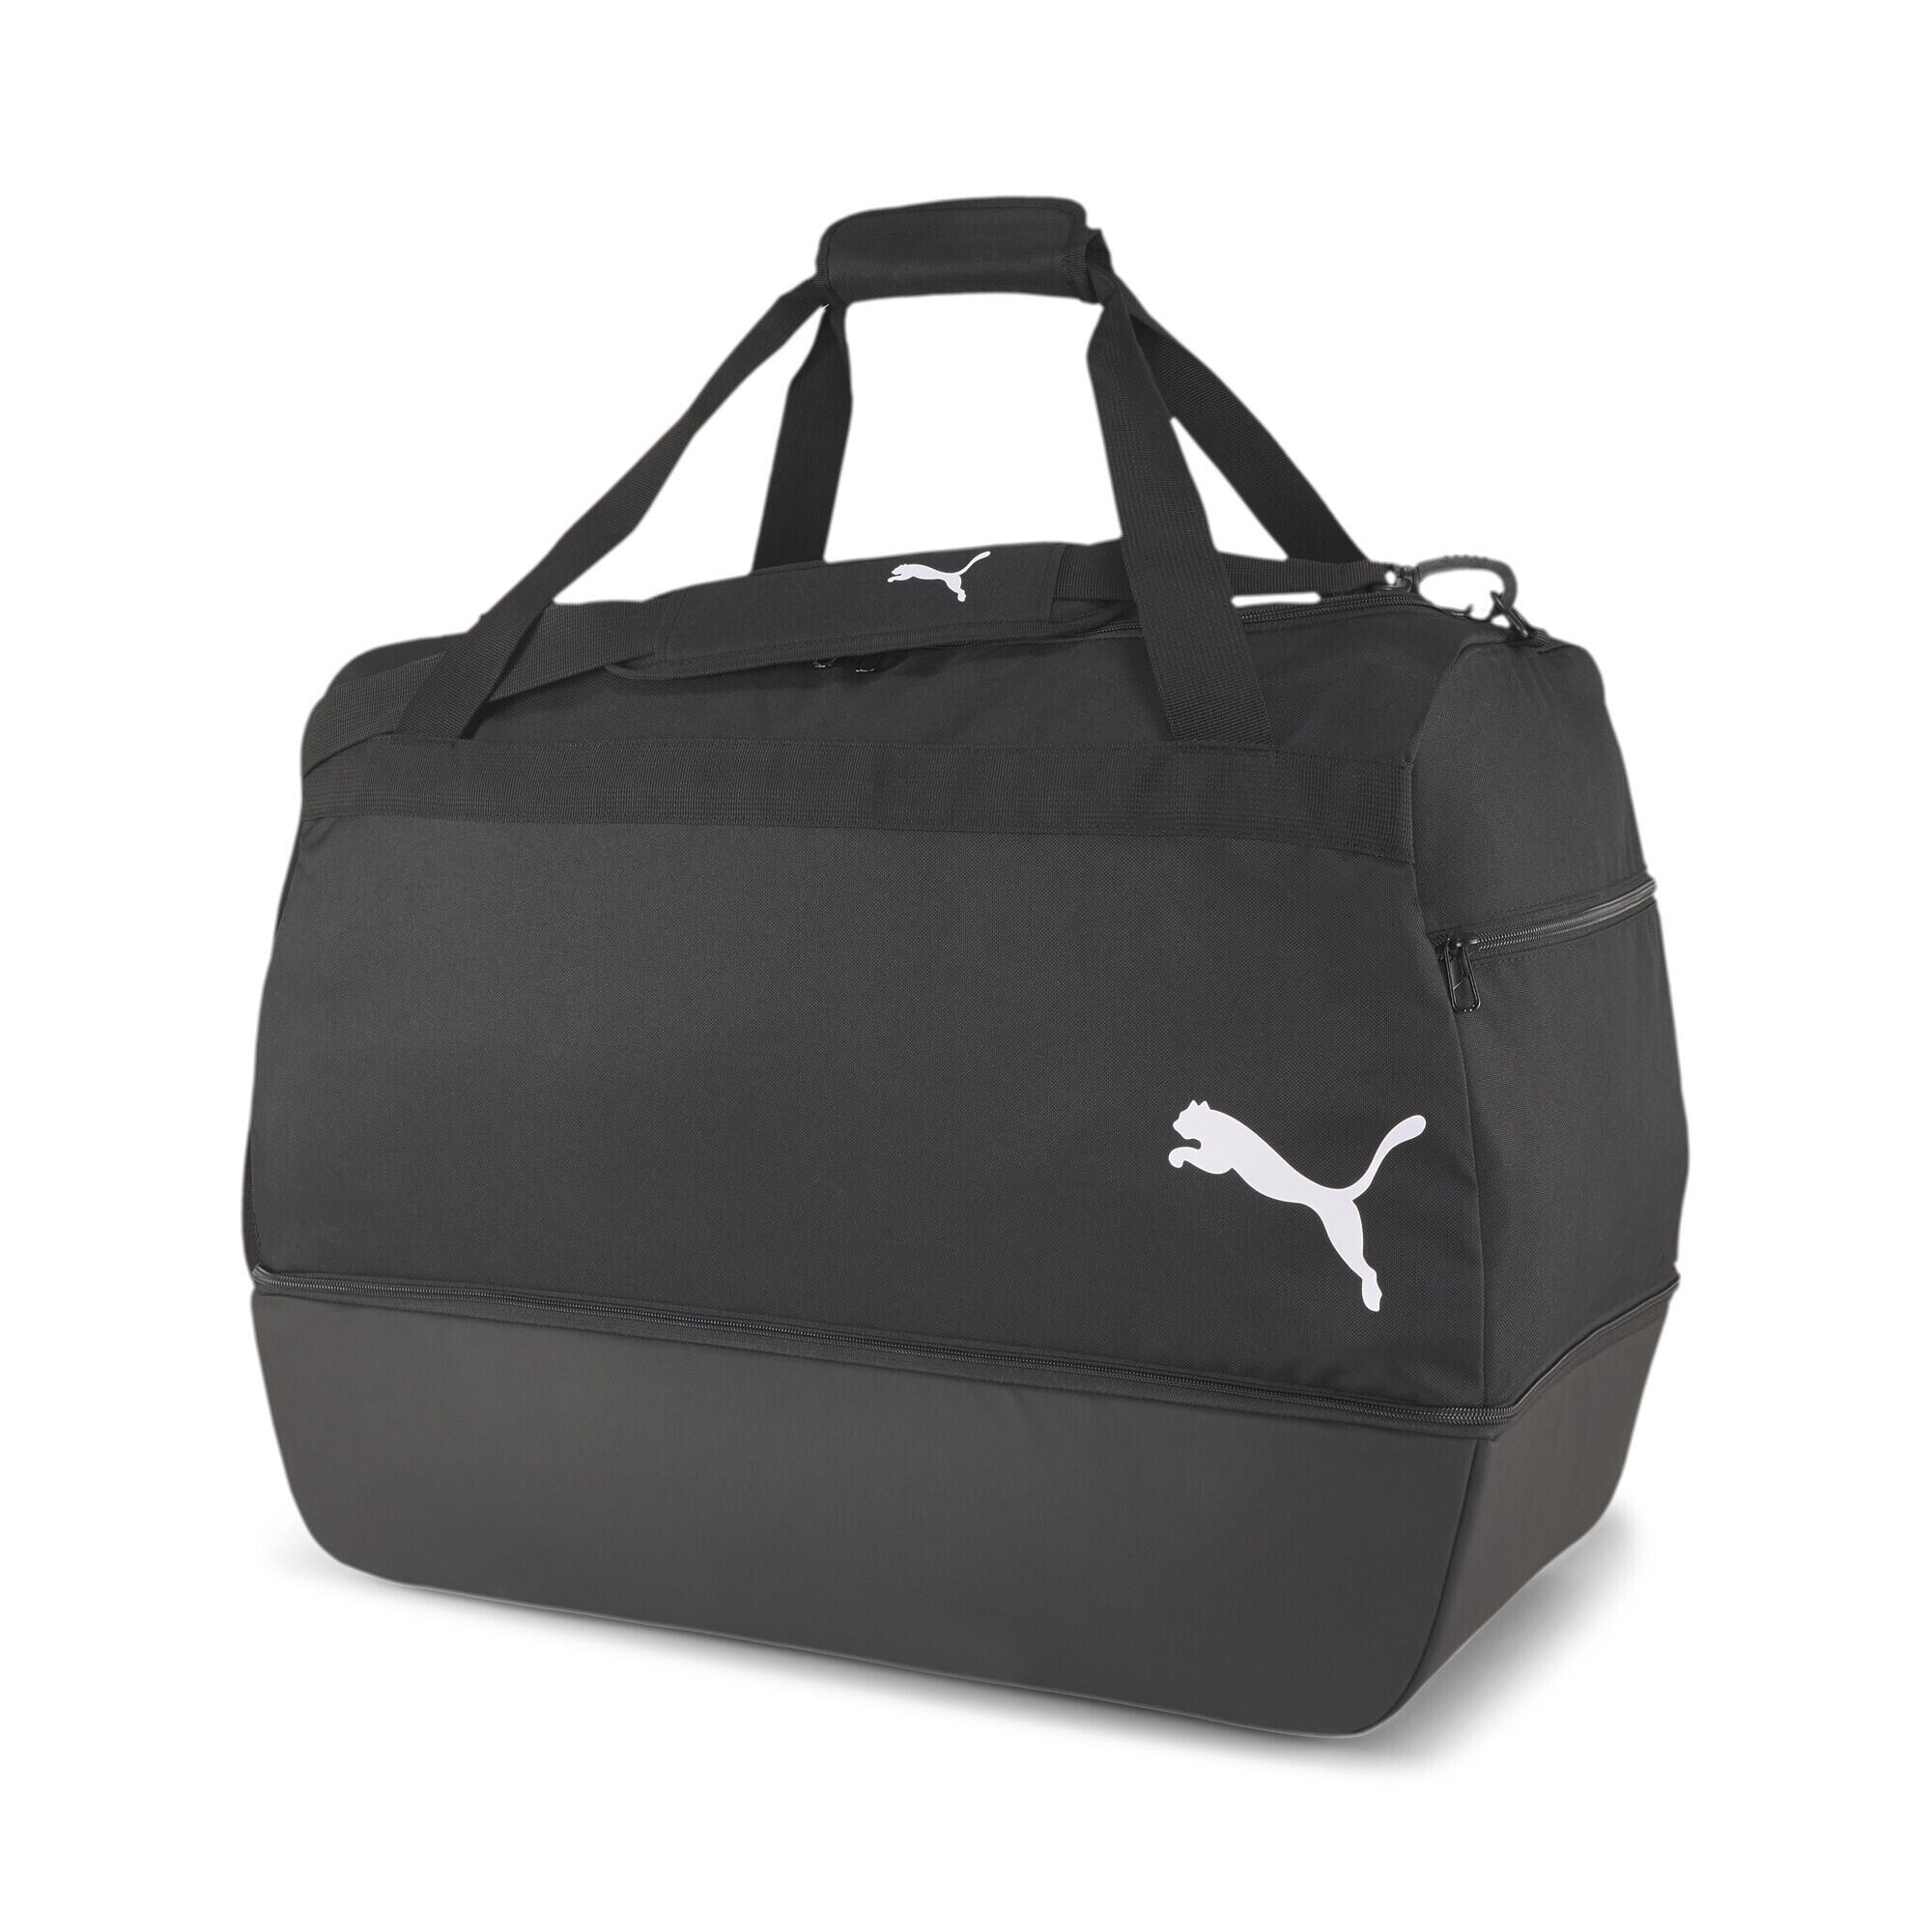 PUMA Puma Team Goal 23 Teambag with Boot Compartment, Black